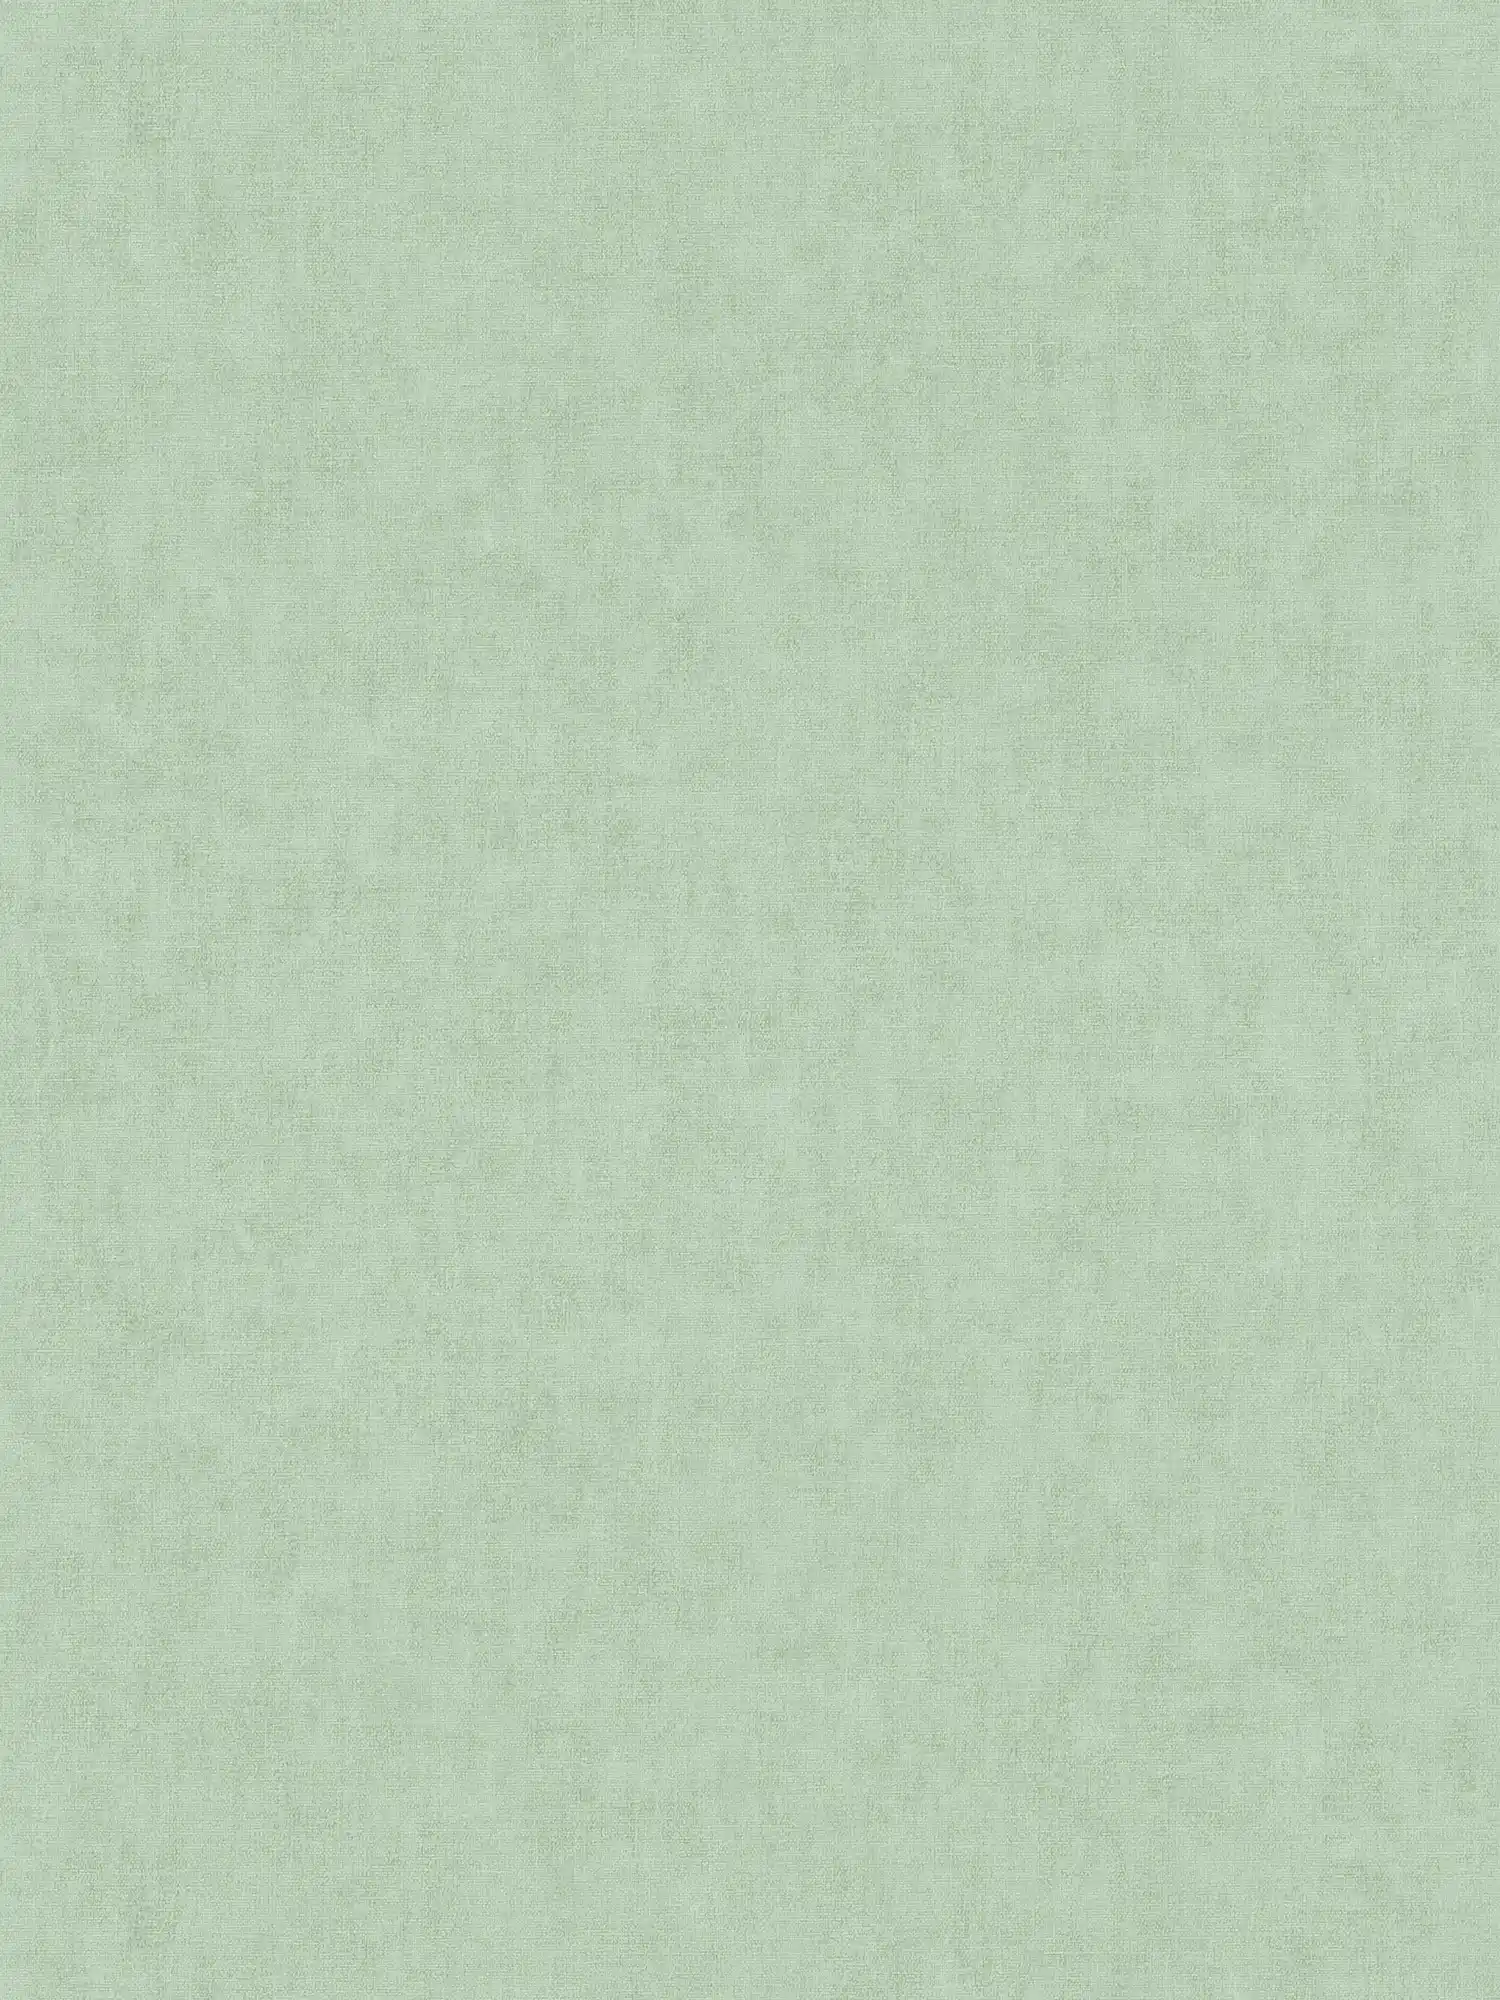 Tapete einfarbig, Leinenoptik & Scandinavian Stil - Grün
